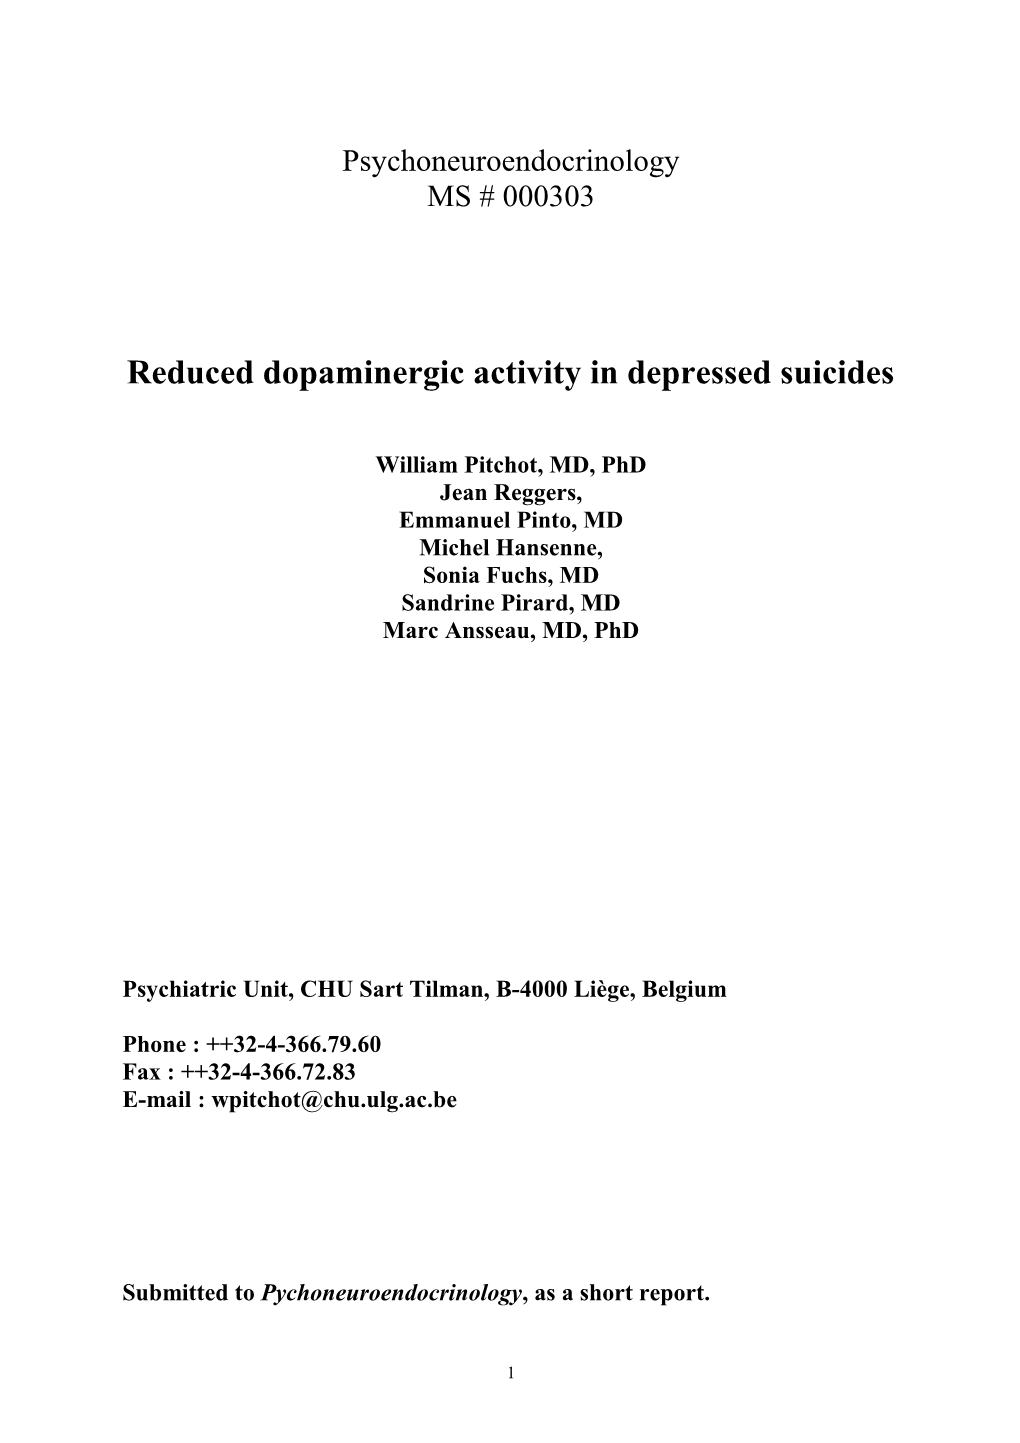 Reduced Dopaminergic Activity in Depressed Suicides